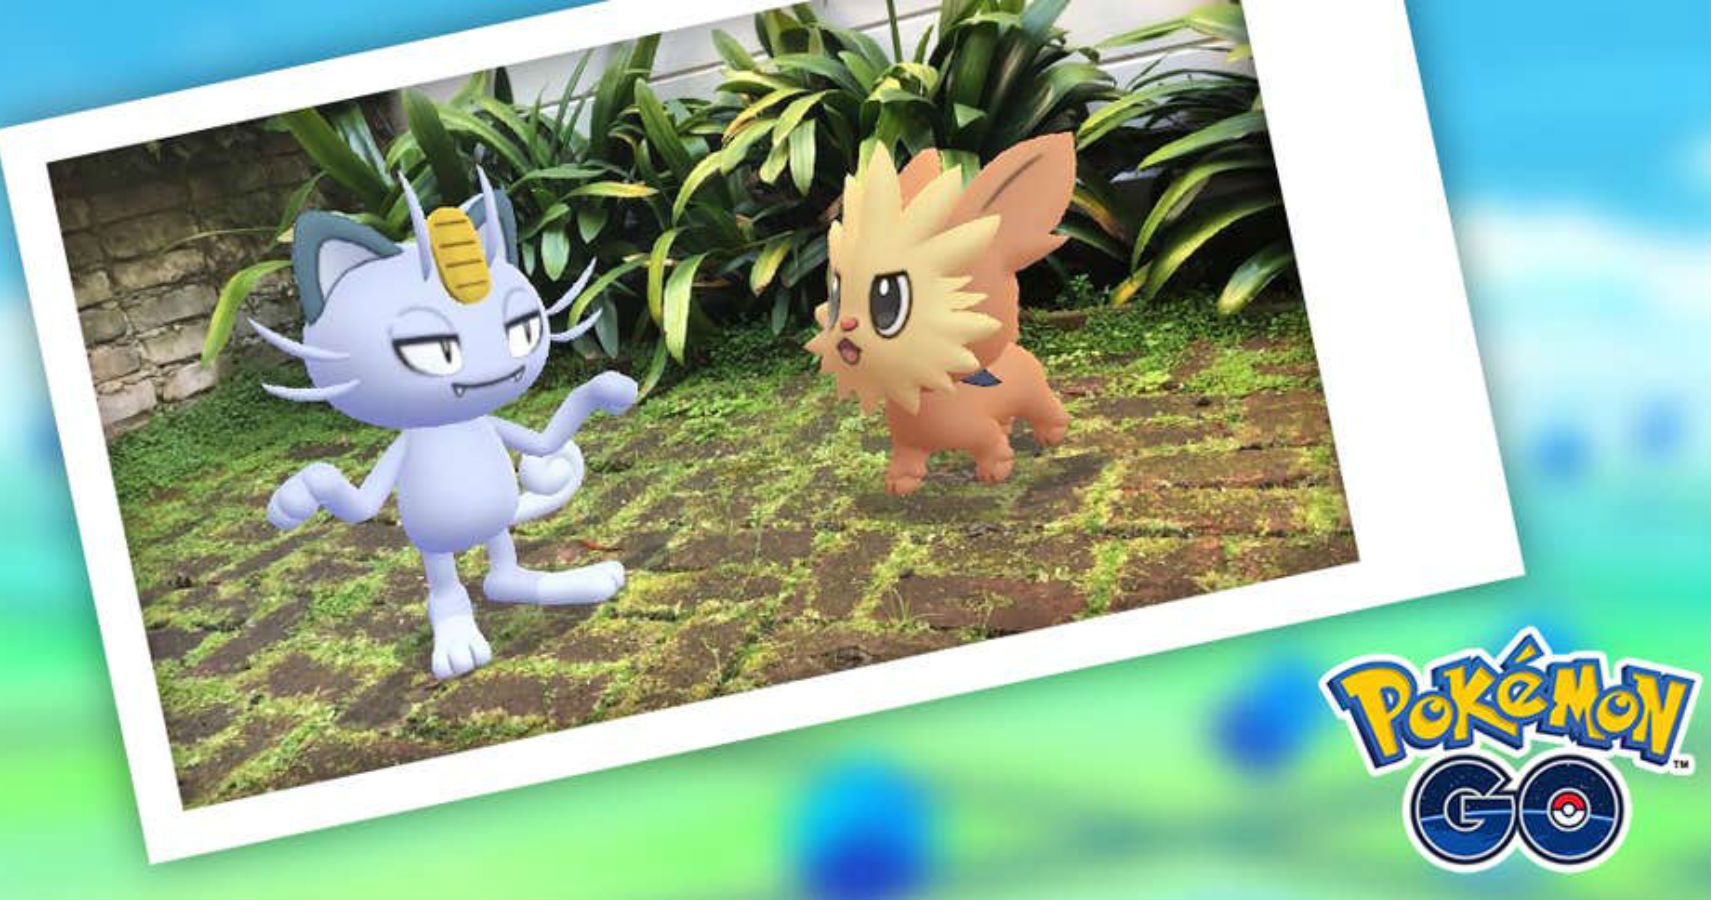 Pokémon GO Buddy Up 2020: All Quests, Rewards, And Spawns